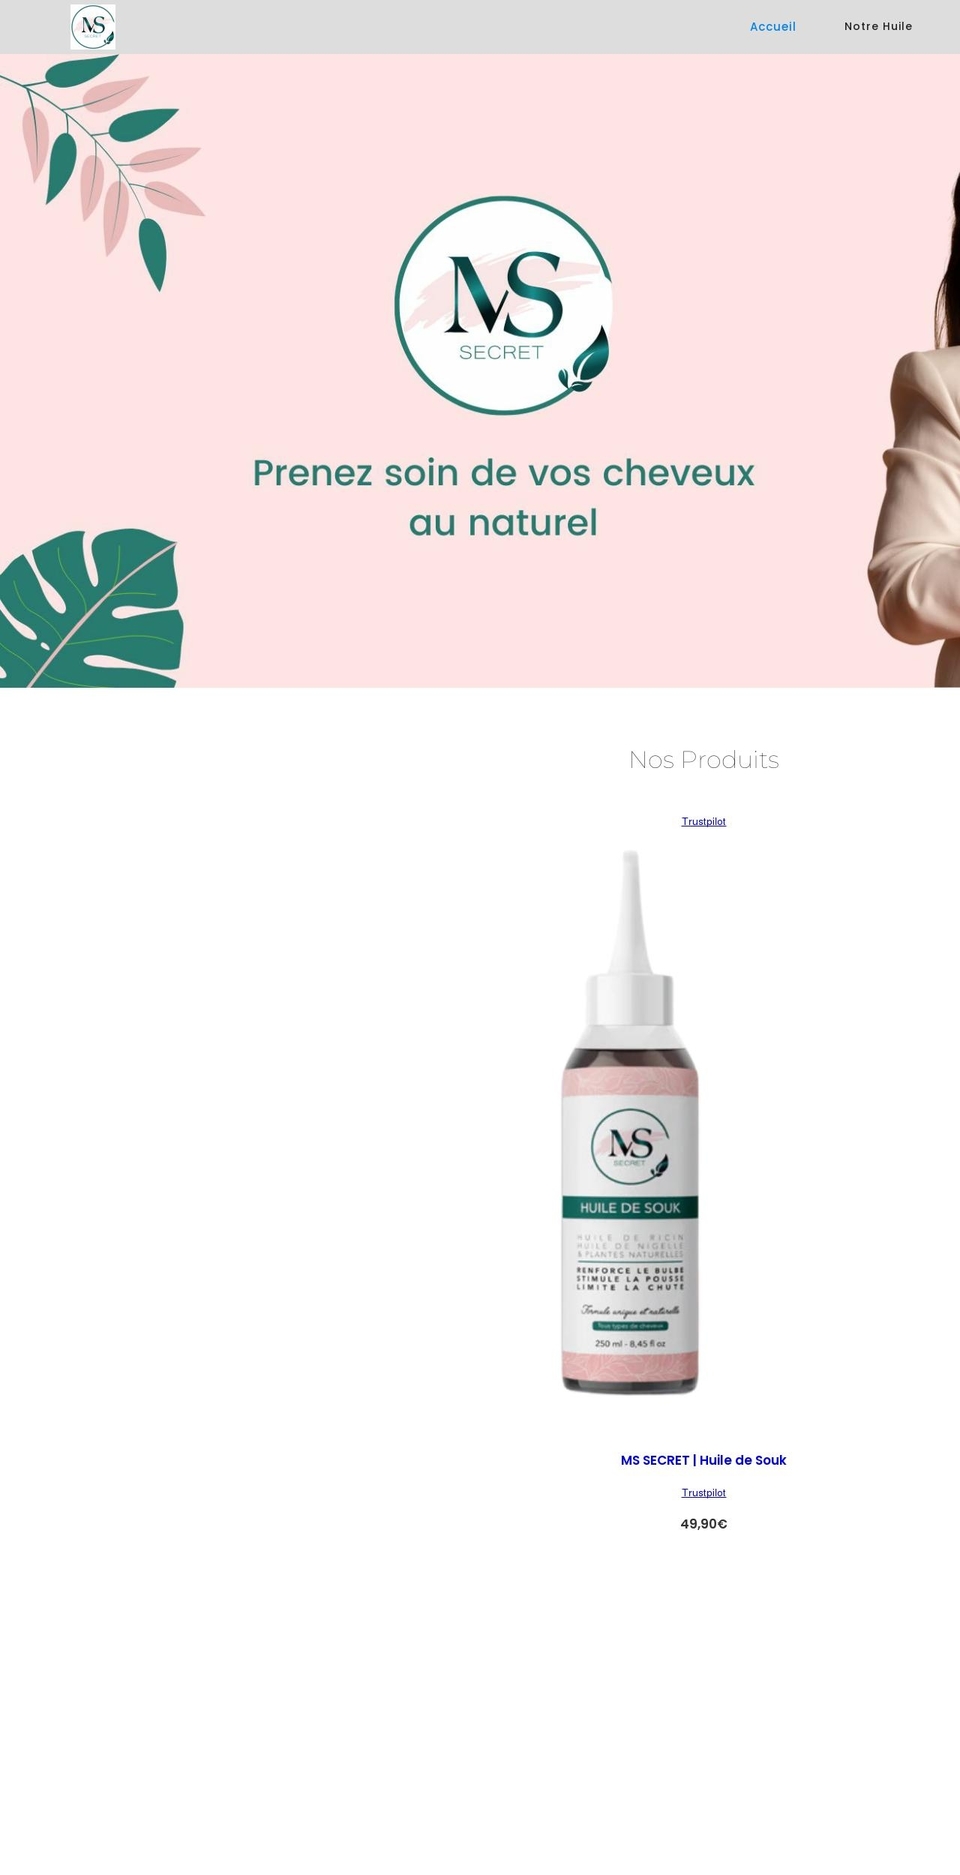 mssecret.fr shopify website screenshot